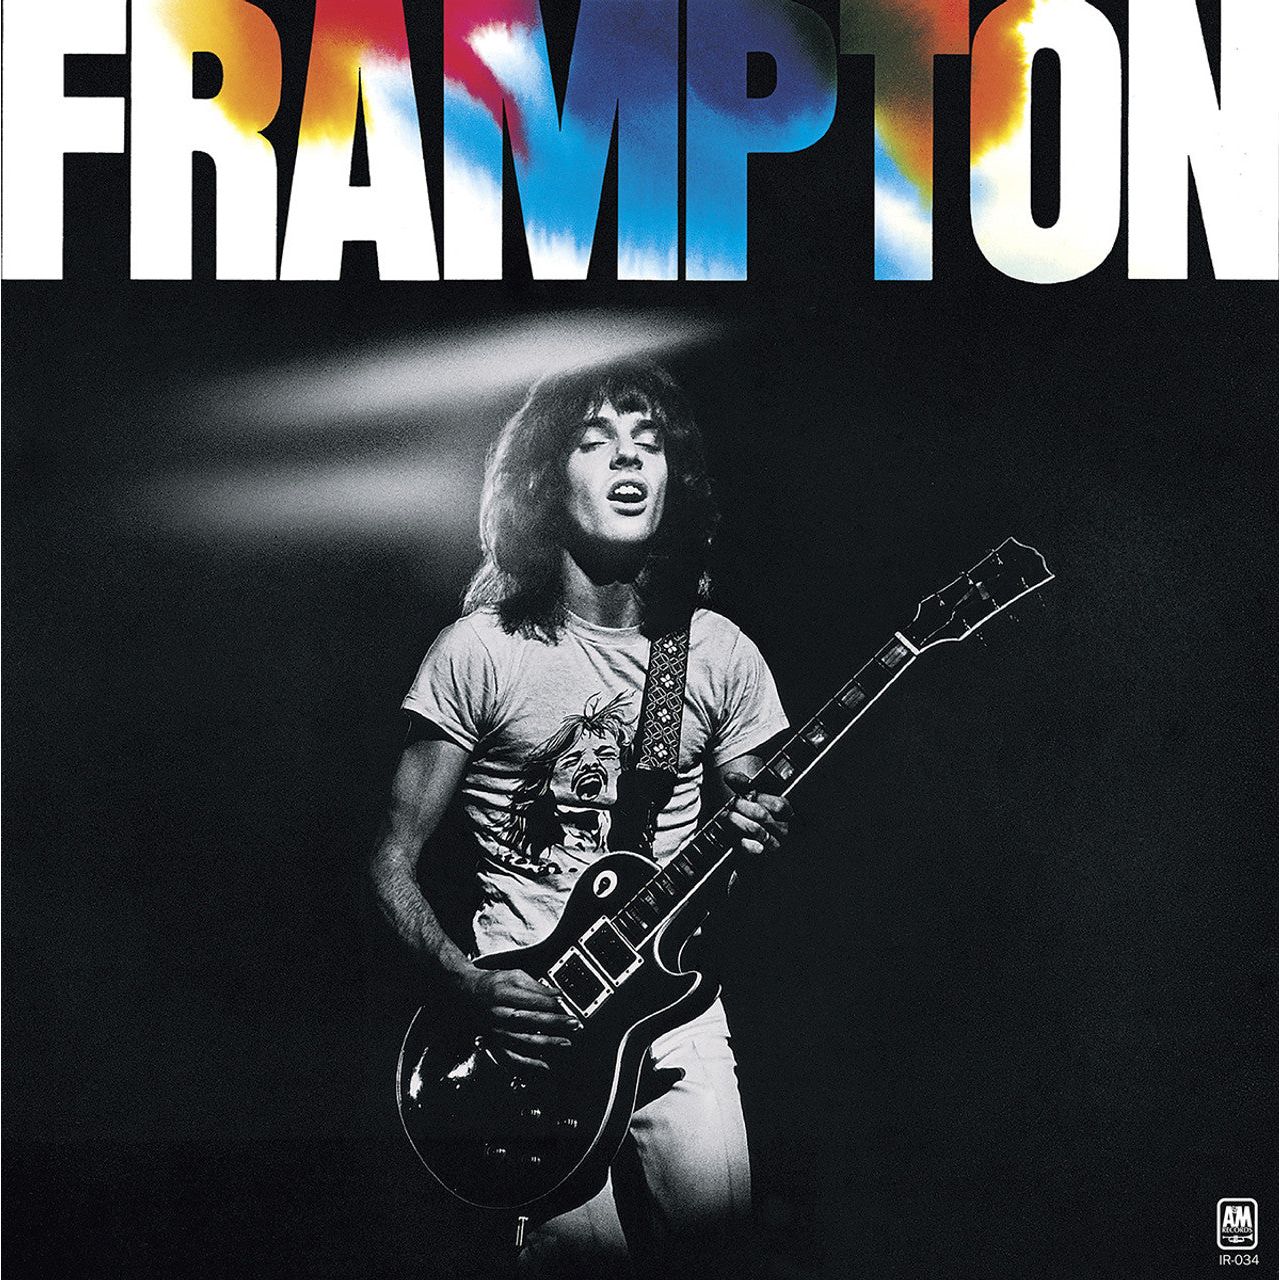 Peter Frampton - Frampton At 50: In the Studio 1972-1975 - Intervention Box Set